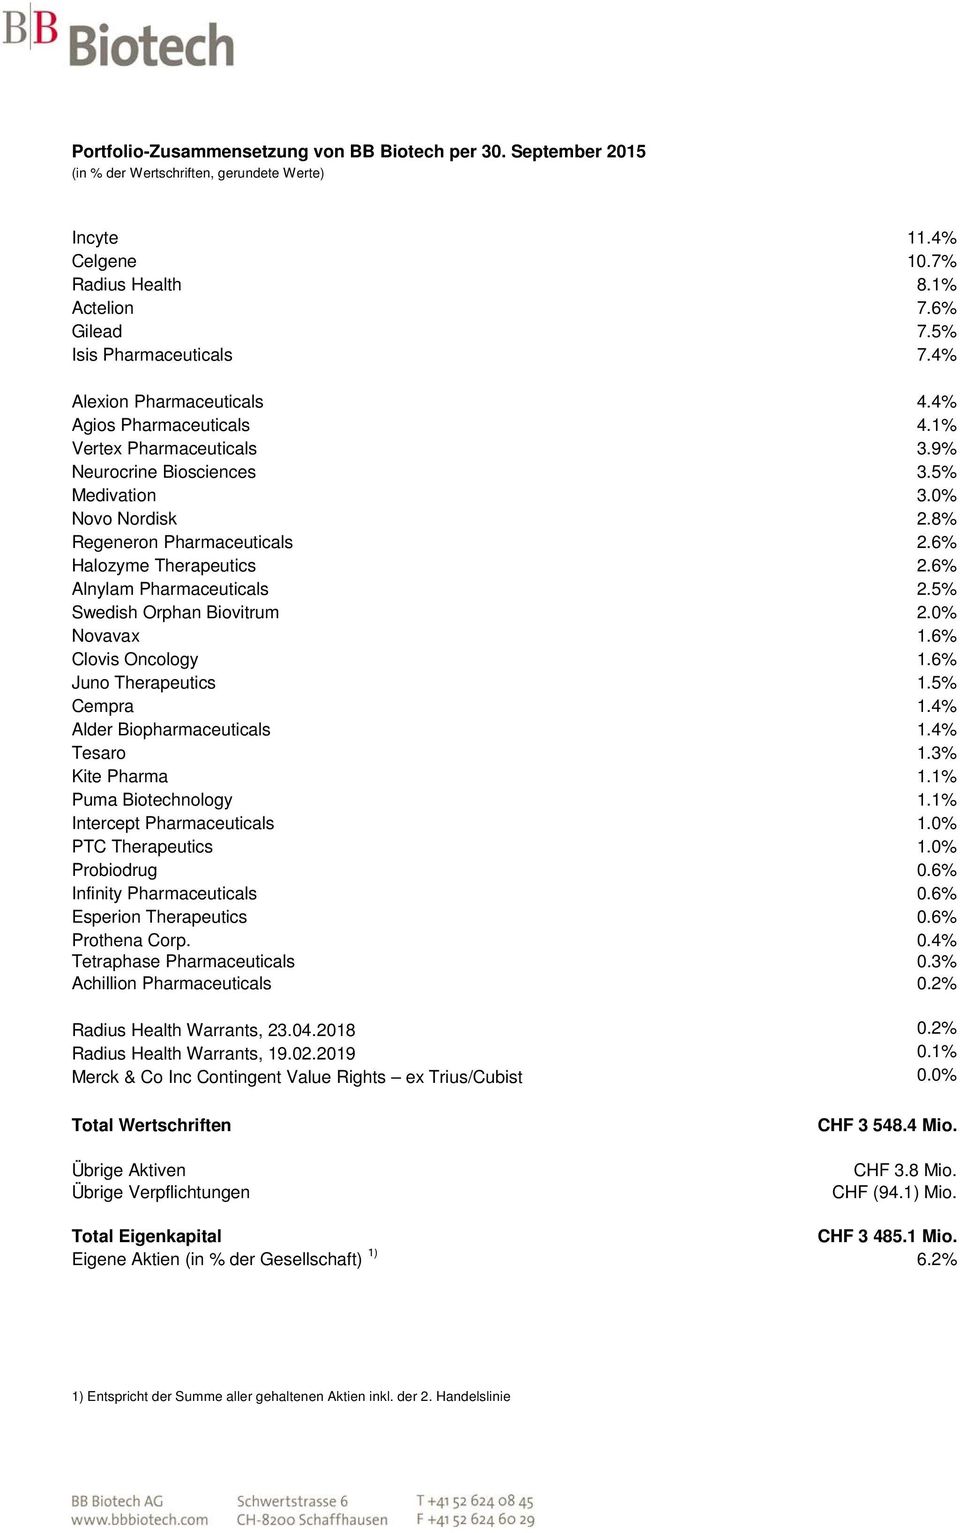 8% Regeneron Pharmaceuticals 2.6% Halozyme Therapeutics 2.6% Alnylam Pharmaceuticals 2.5% Swedish Orphan Biovitrum 2.0% Novavax 1.6% Clovis Oncology 1.6% Juno Therapeutics 1.5% Cempra 1.